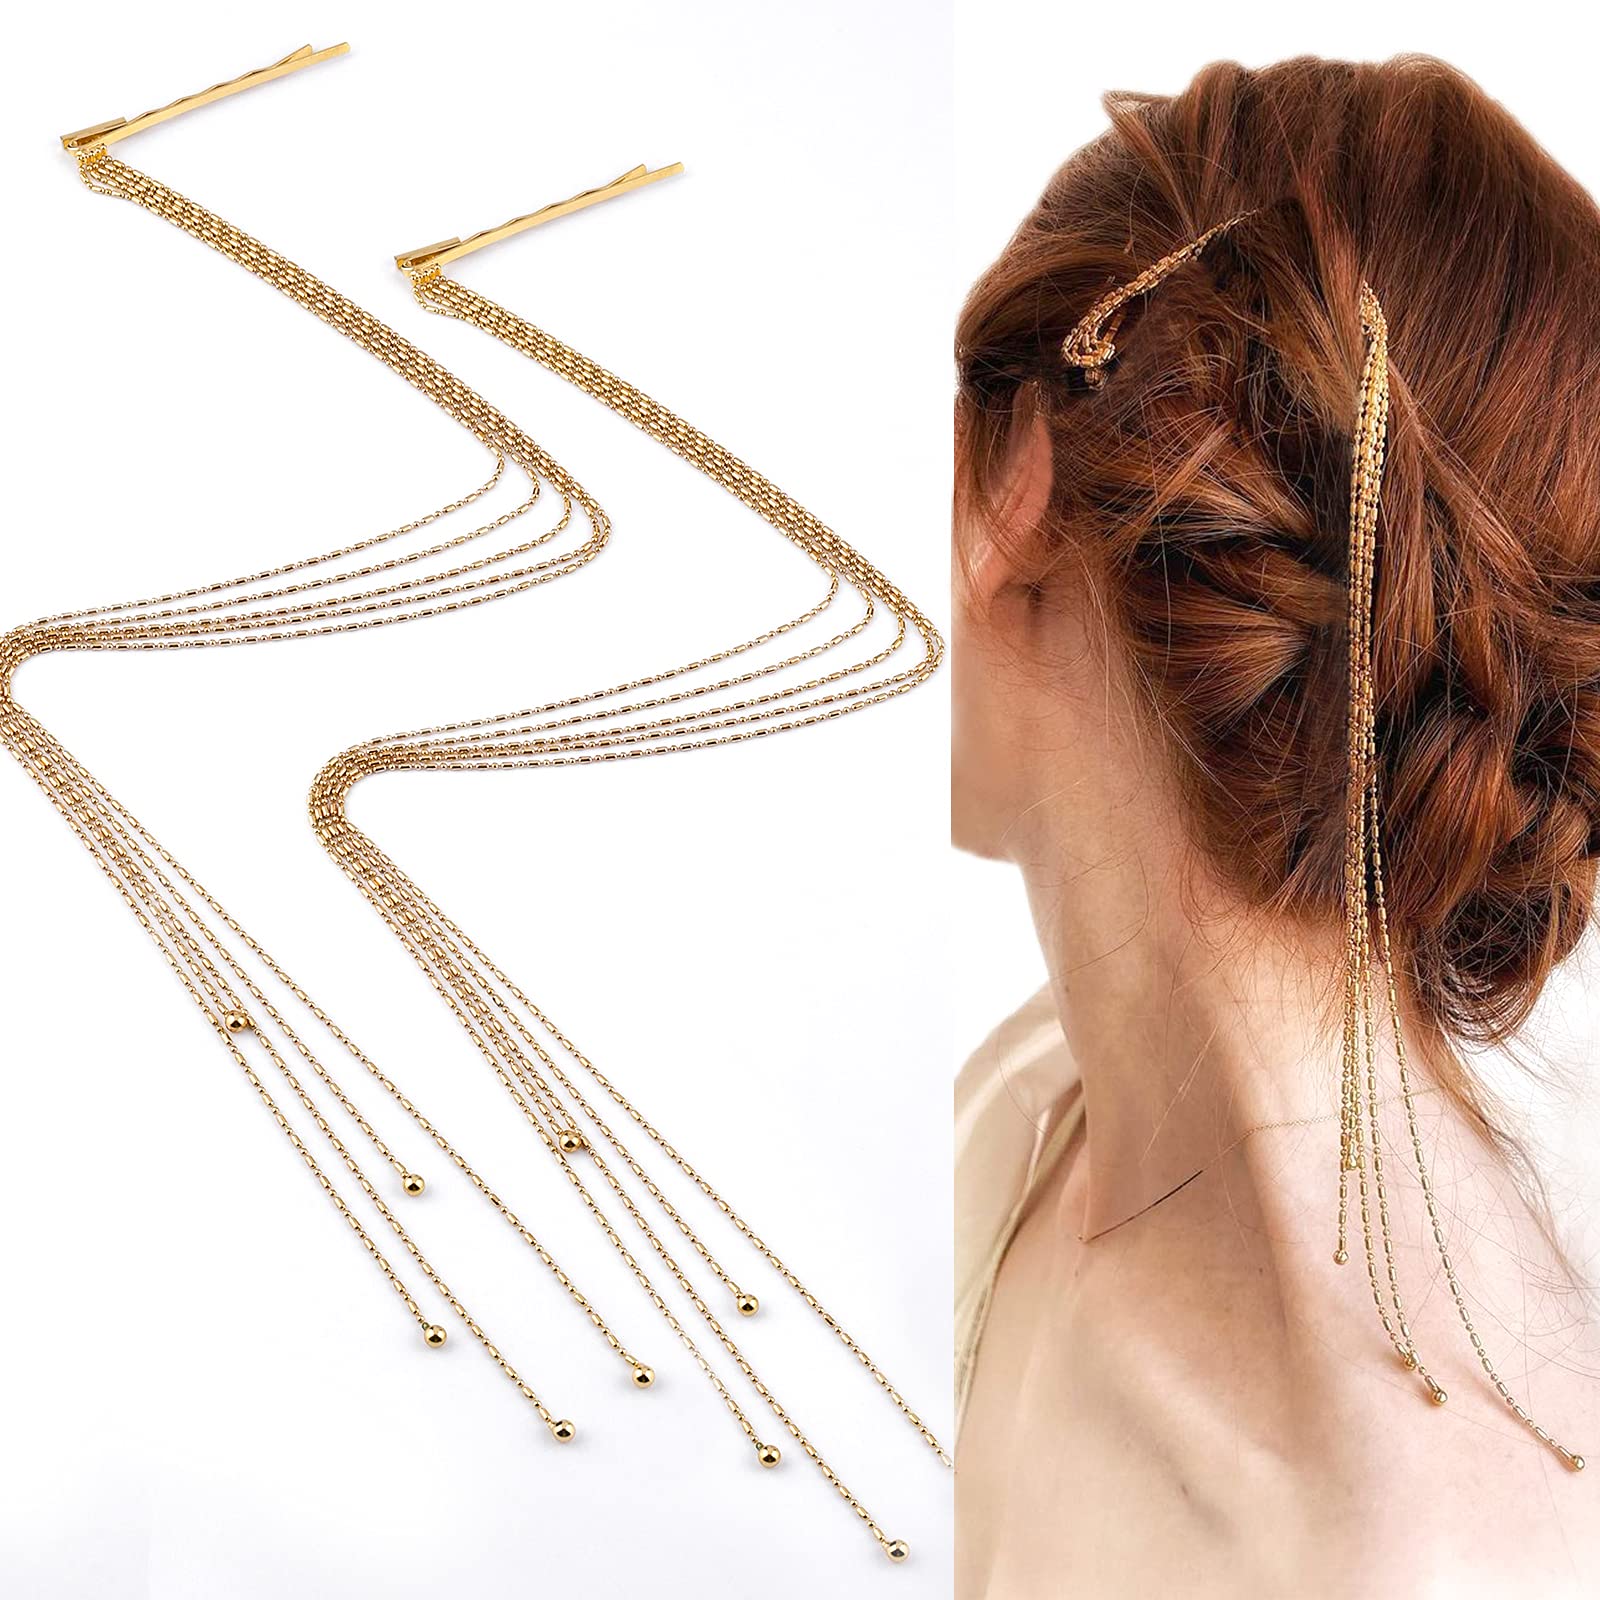 FRDTLUTHW 6 Pcs Hair Accessories Loc Hair Jewelry for Women Braids,  Halloween Hair Decoration, Dreadlock Accessories(Gold & Silver)